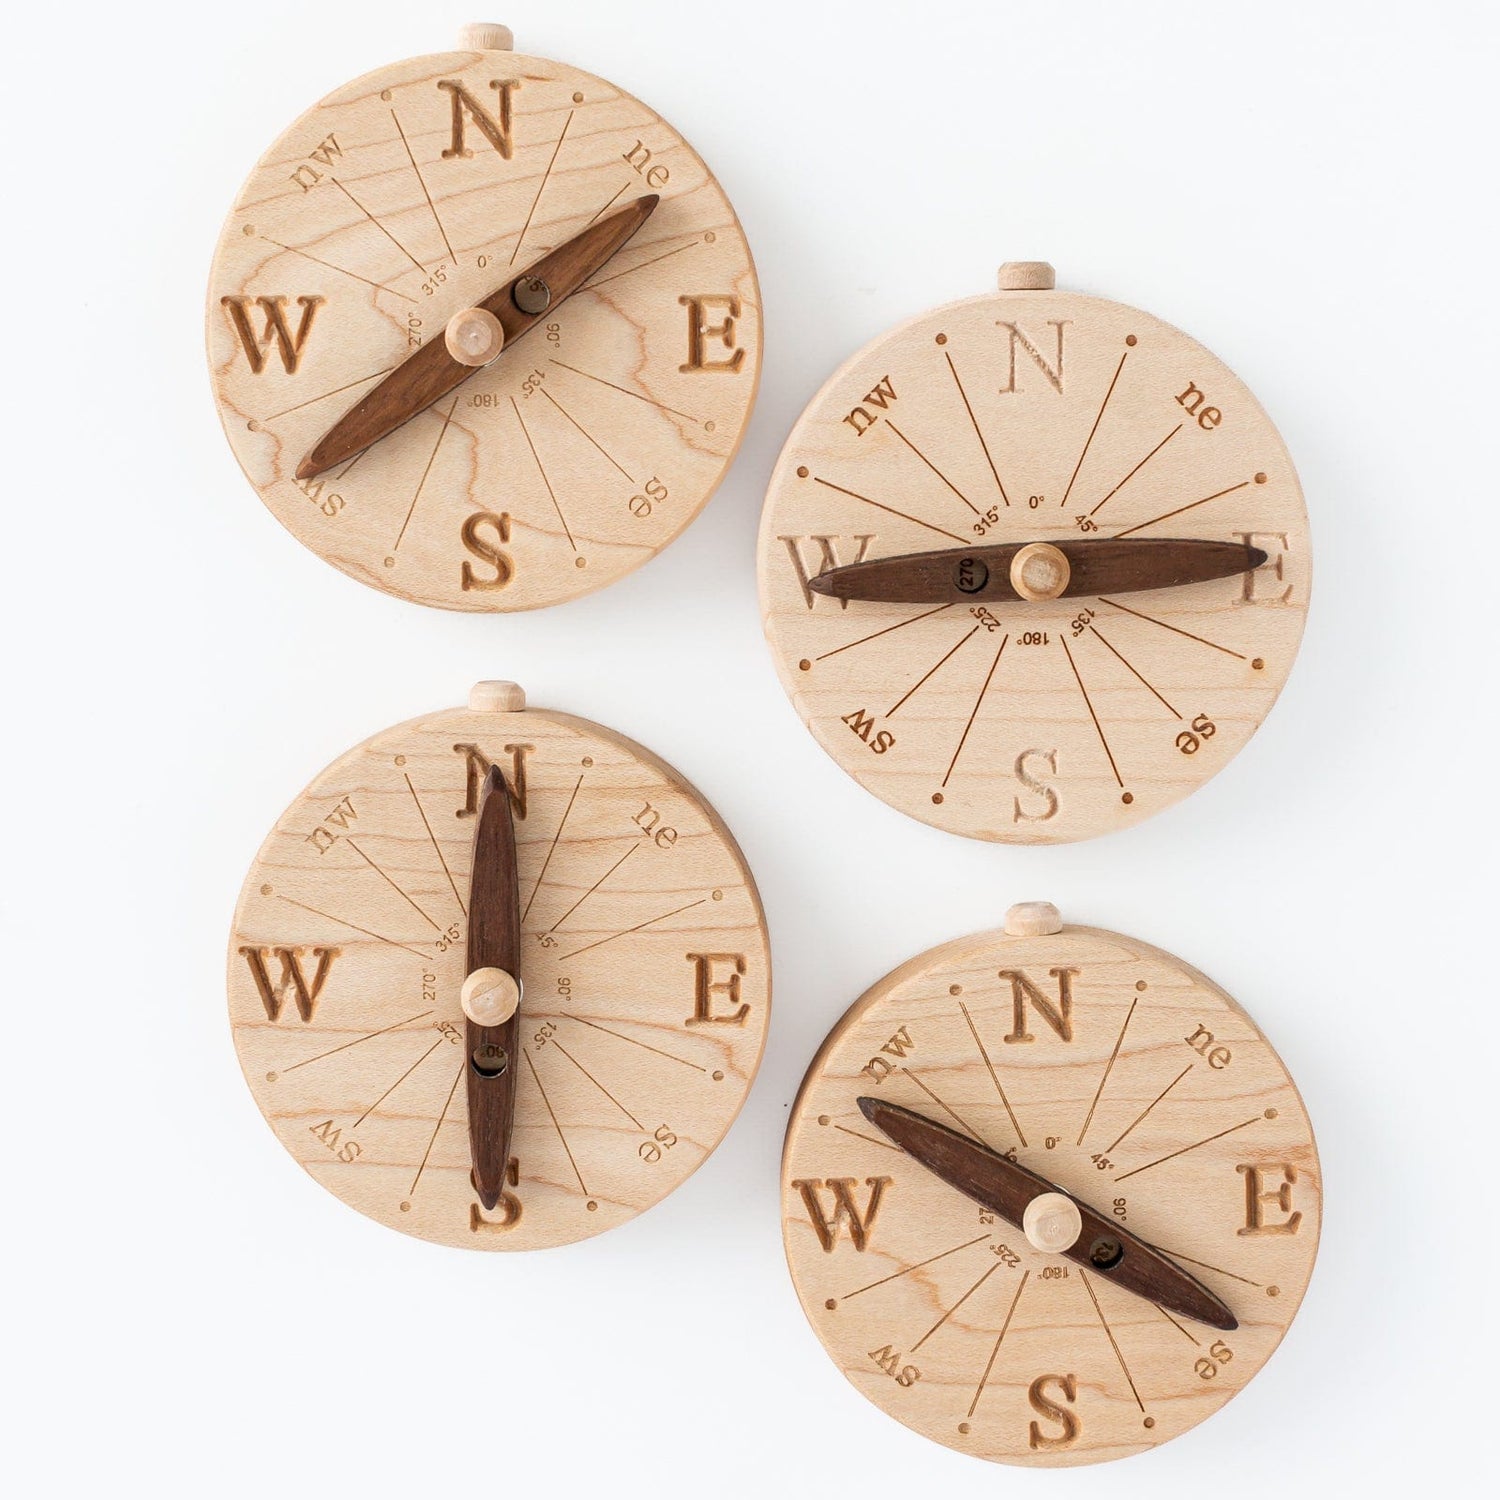 Little Rose & Co. Pretend Play Handmade Wooden Toy Compass